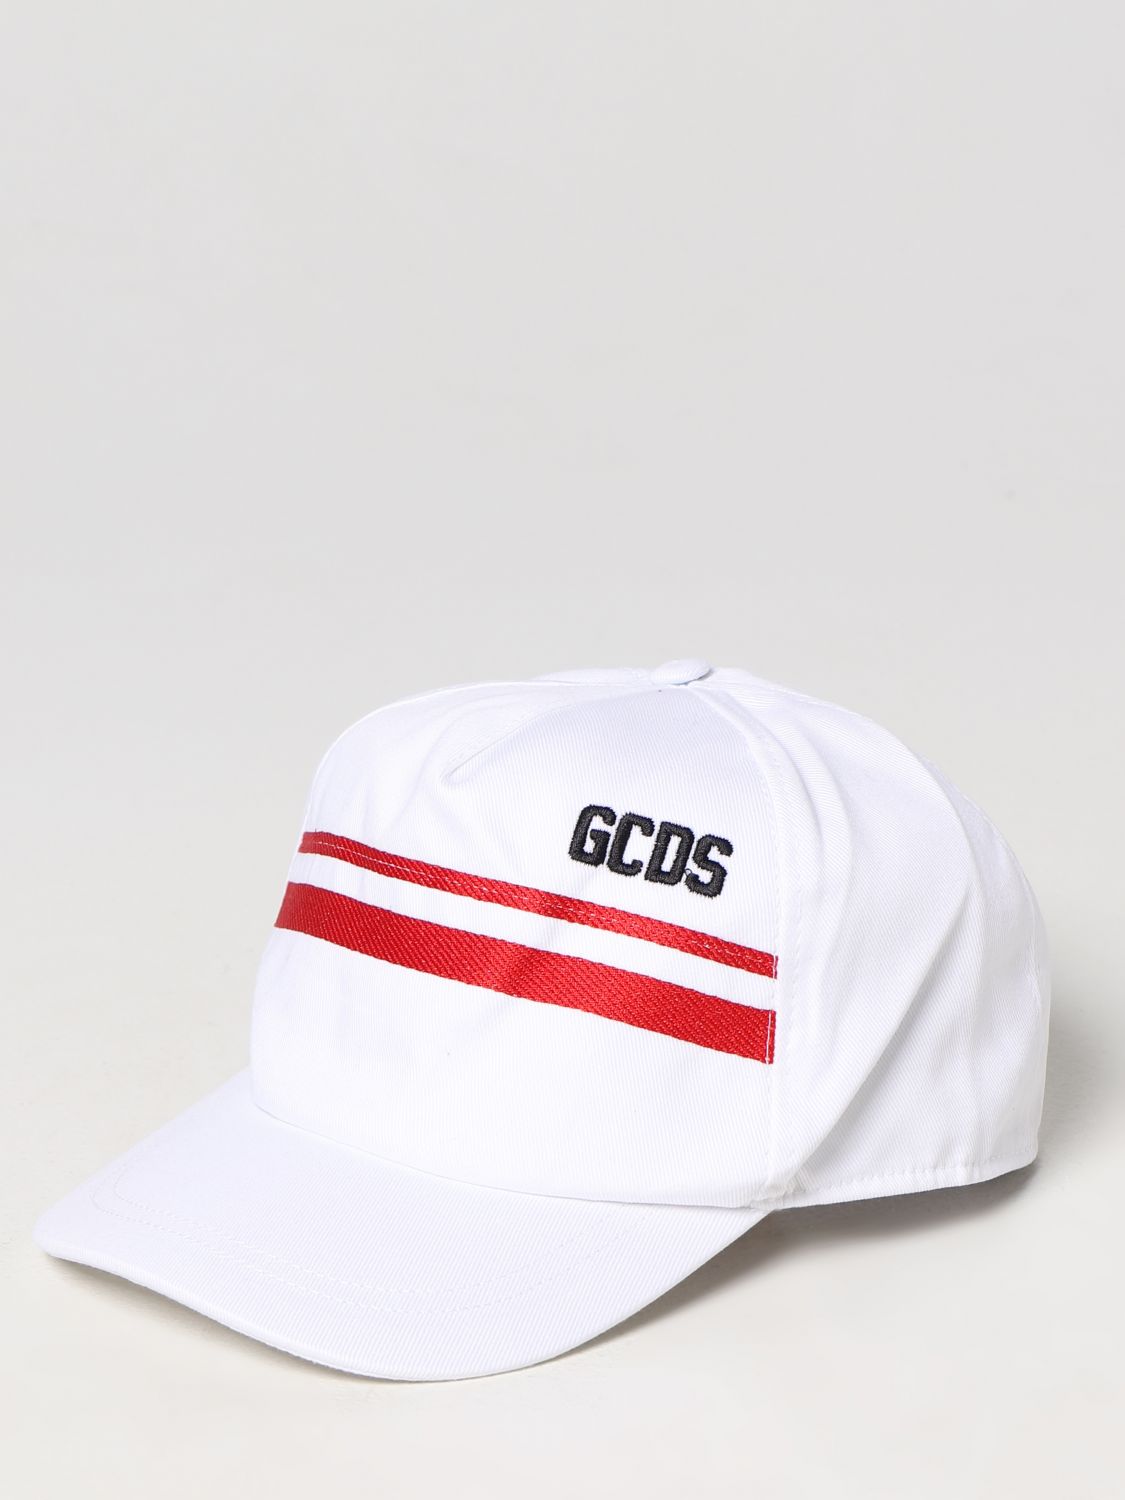 Gcds Girls' Hats  Kids Kids Color White